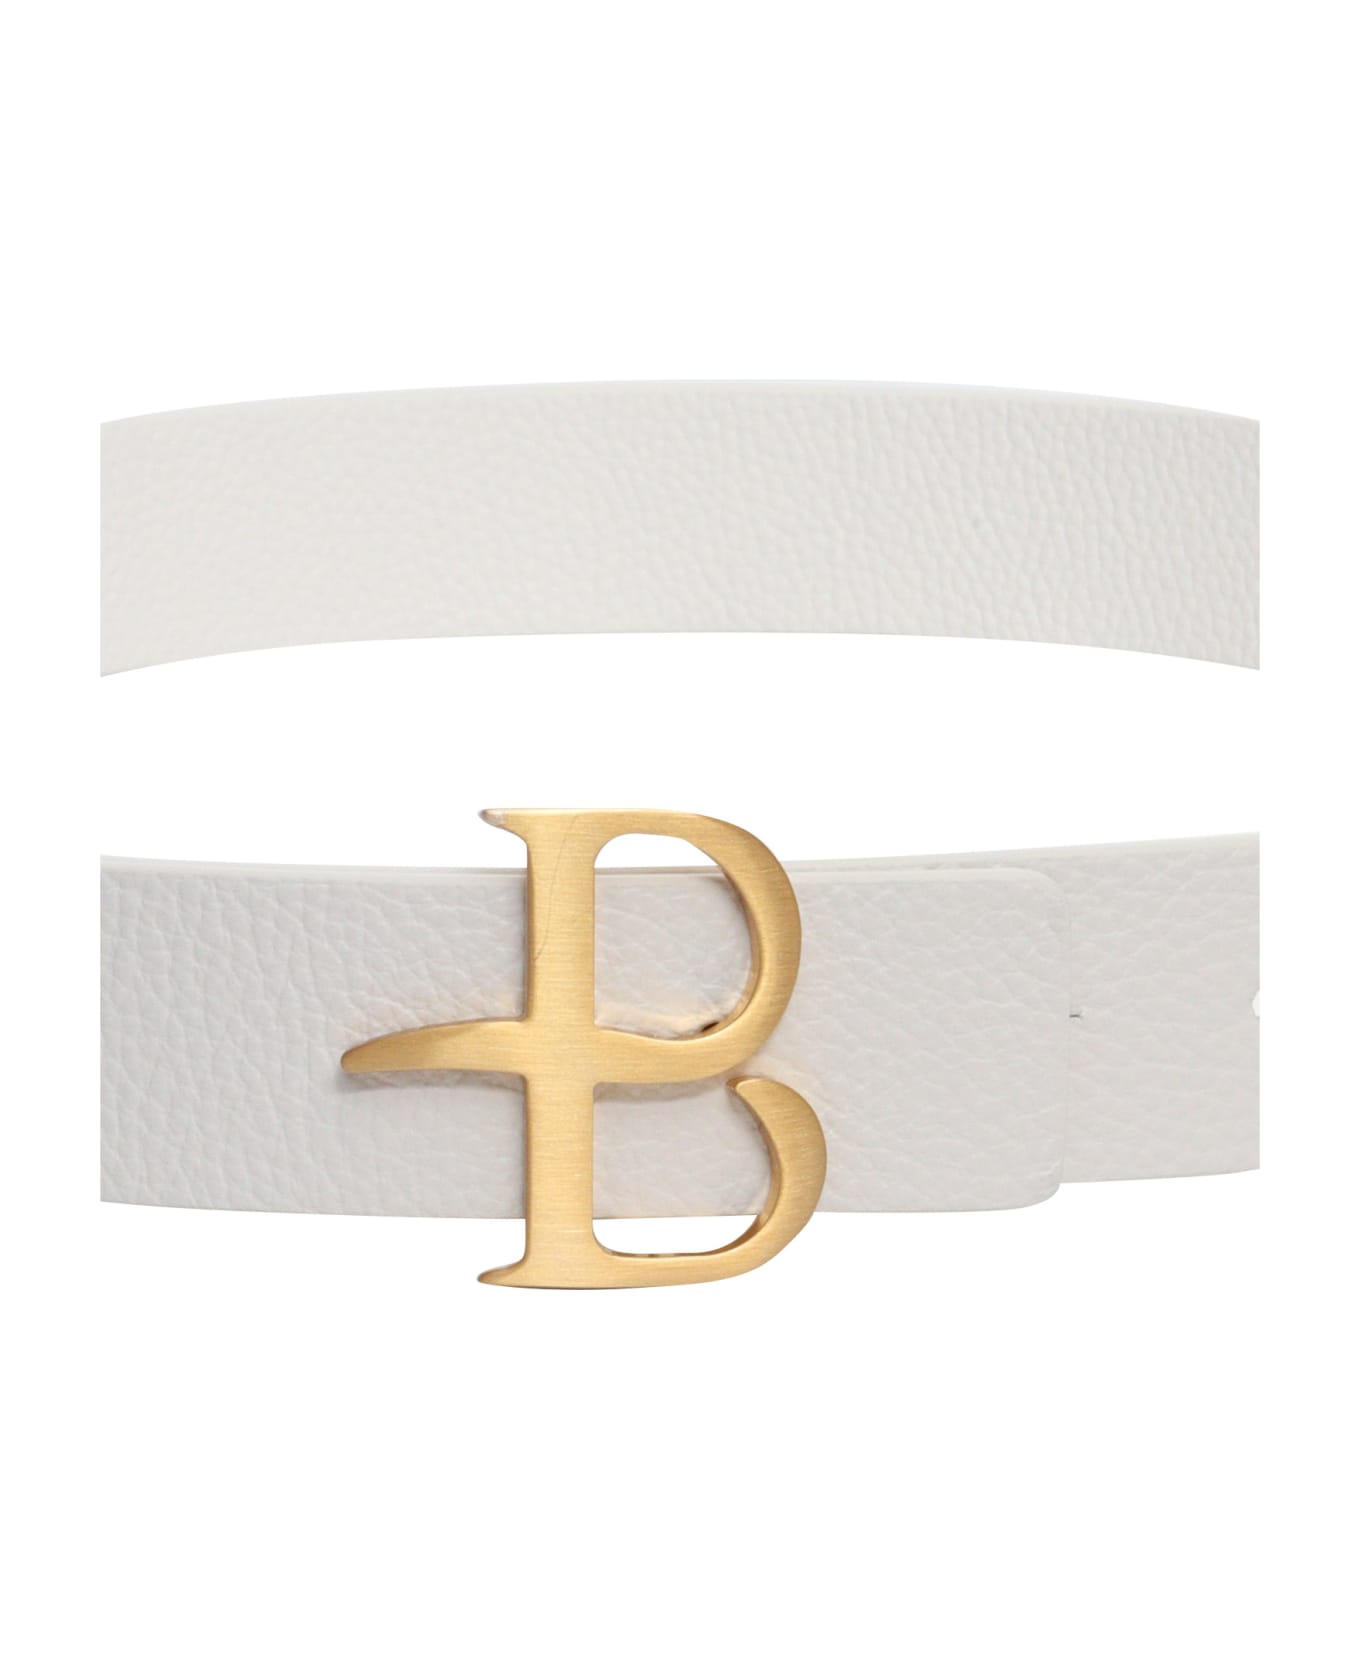 Ballantyne White Belt With Gold Logo - WHITE